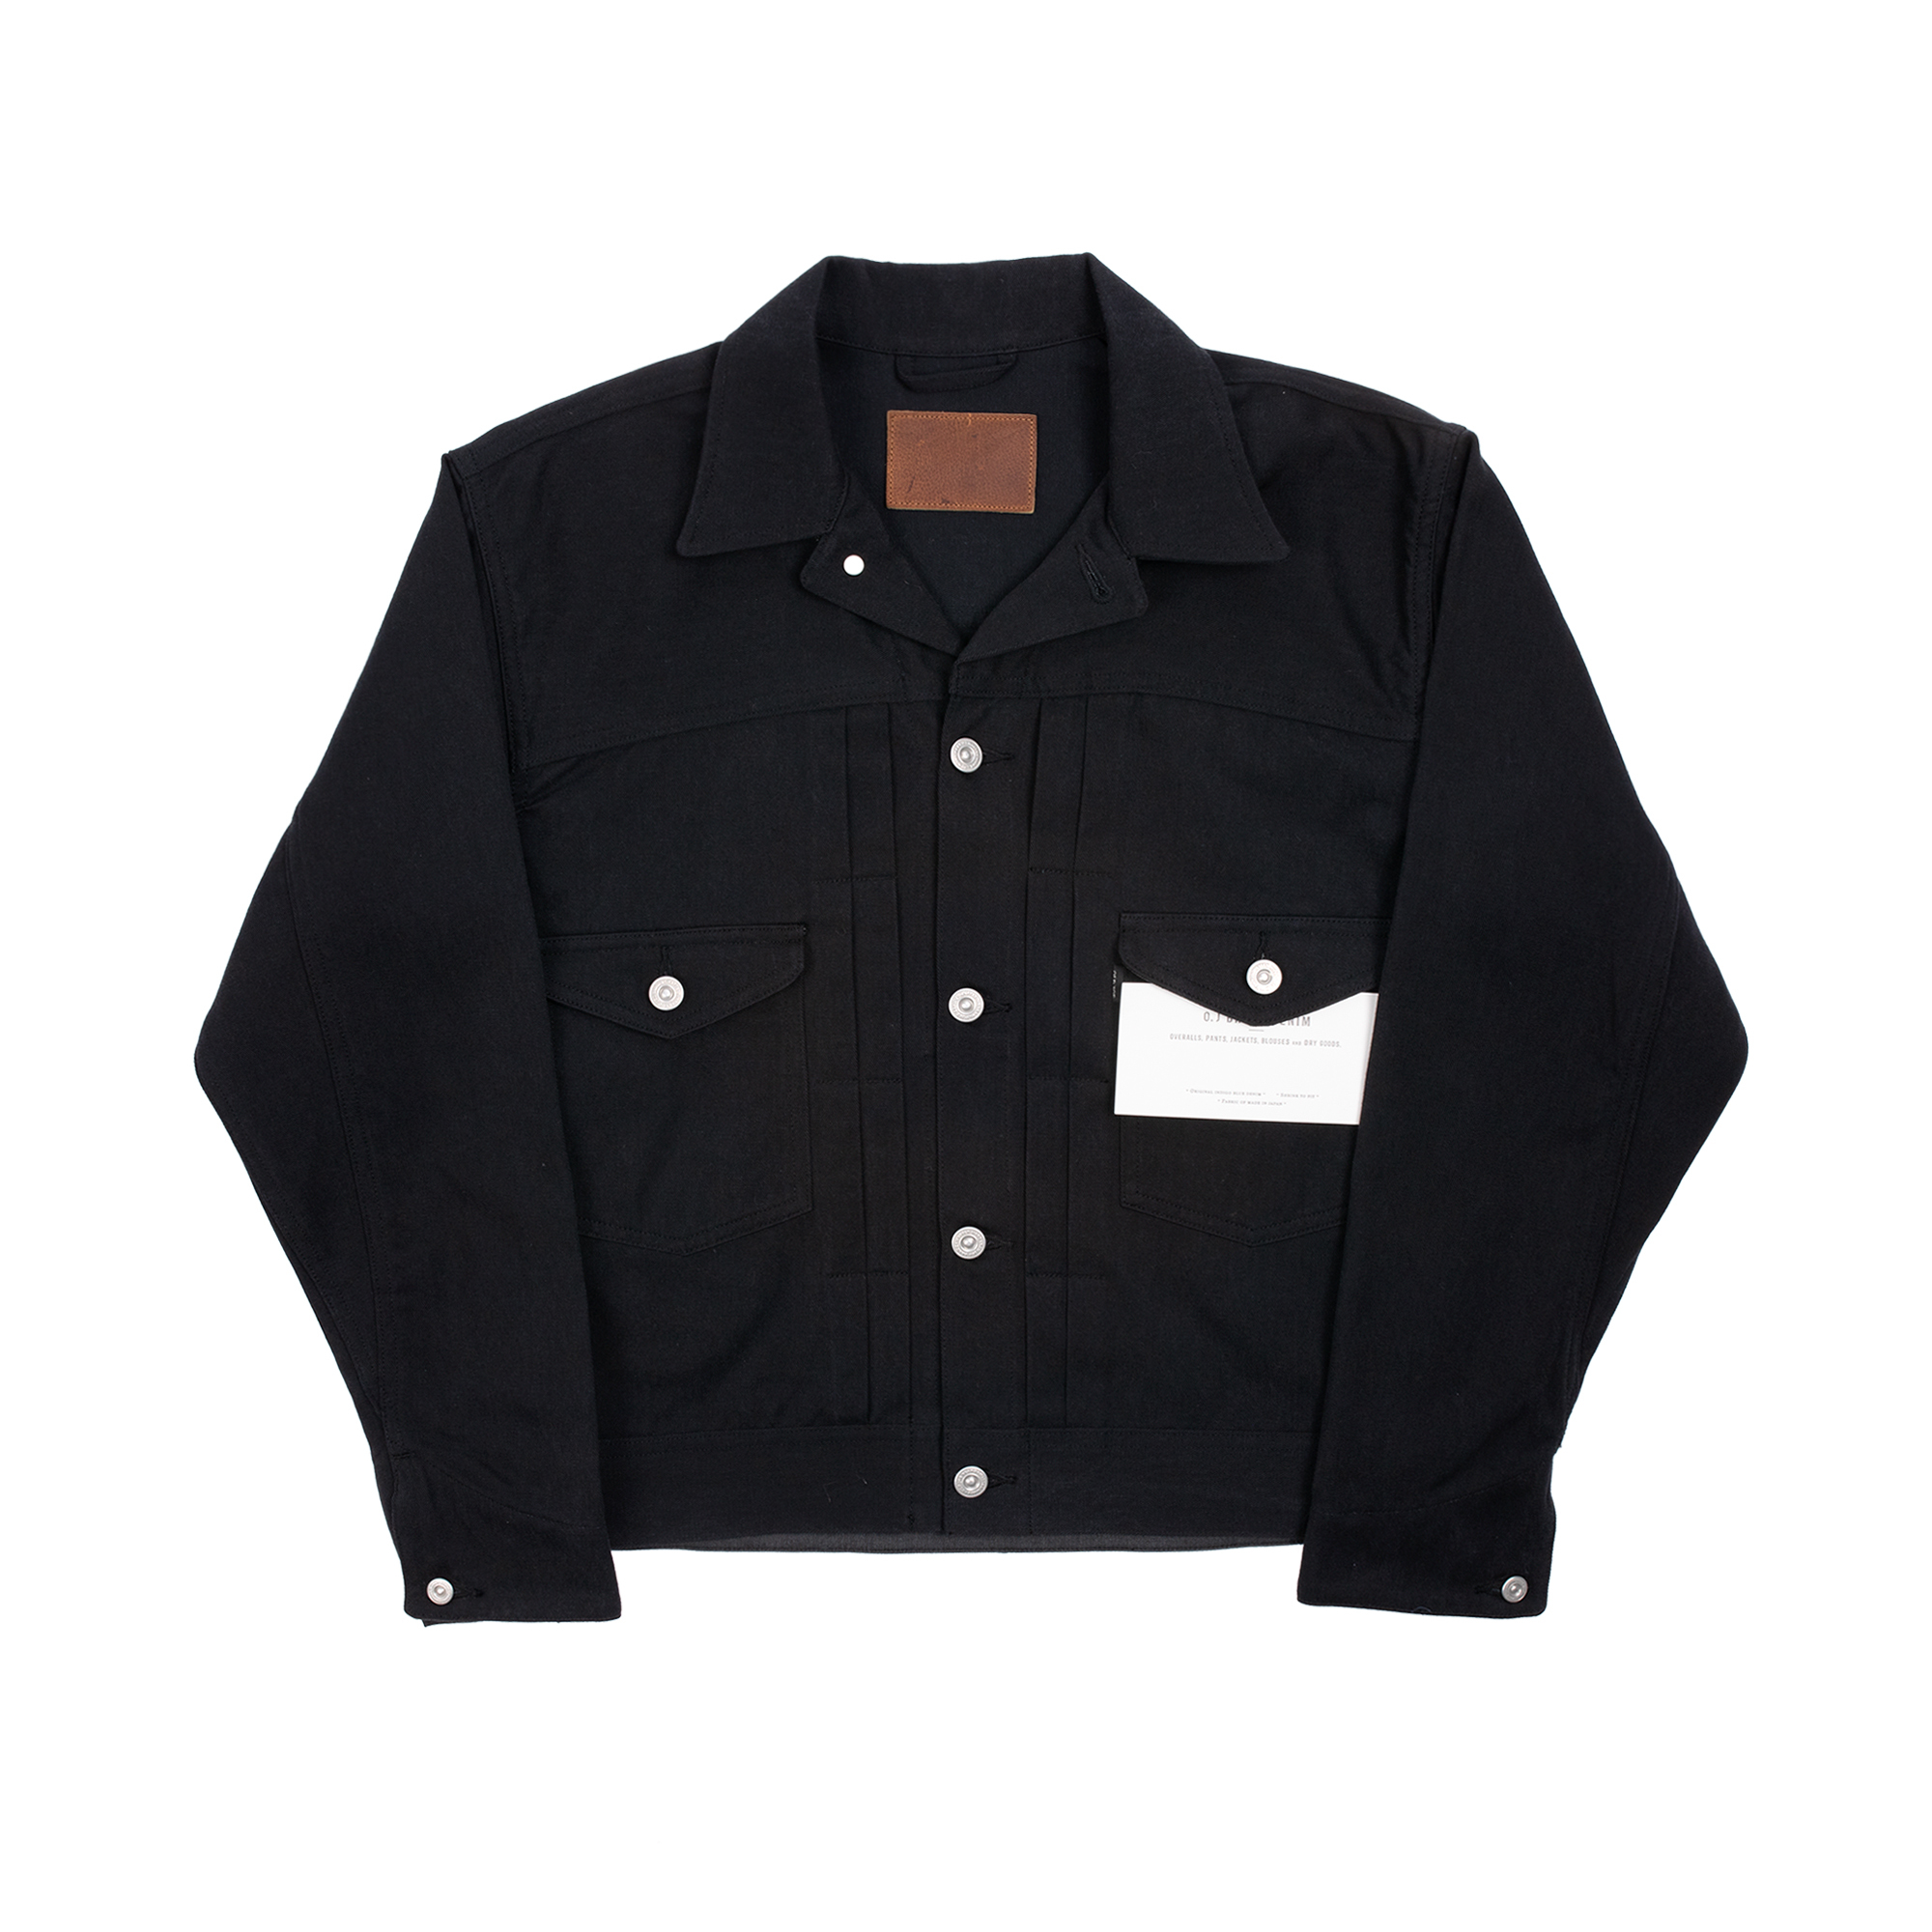 Old Joe Brand - Open Collar Ranch Jacket (Black)